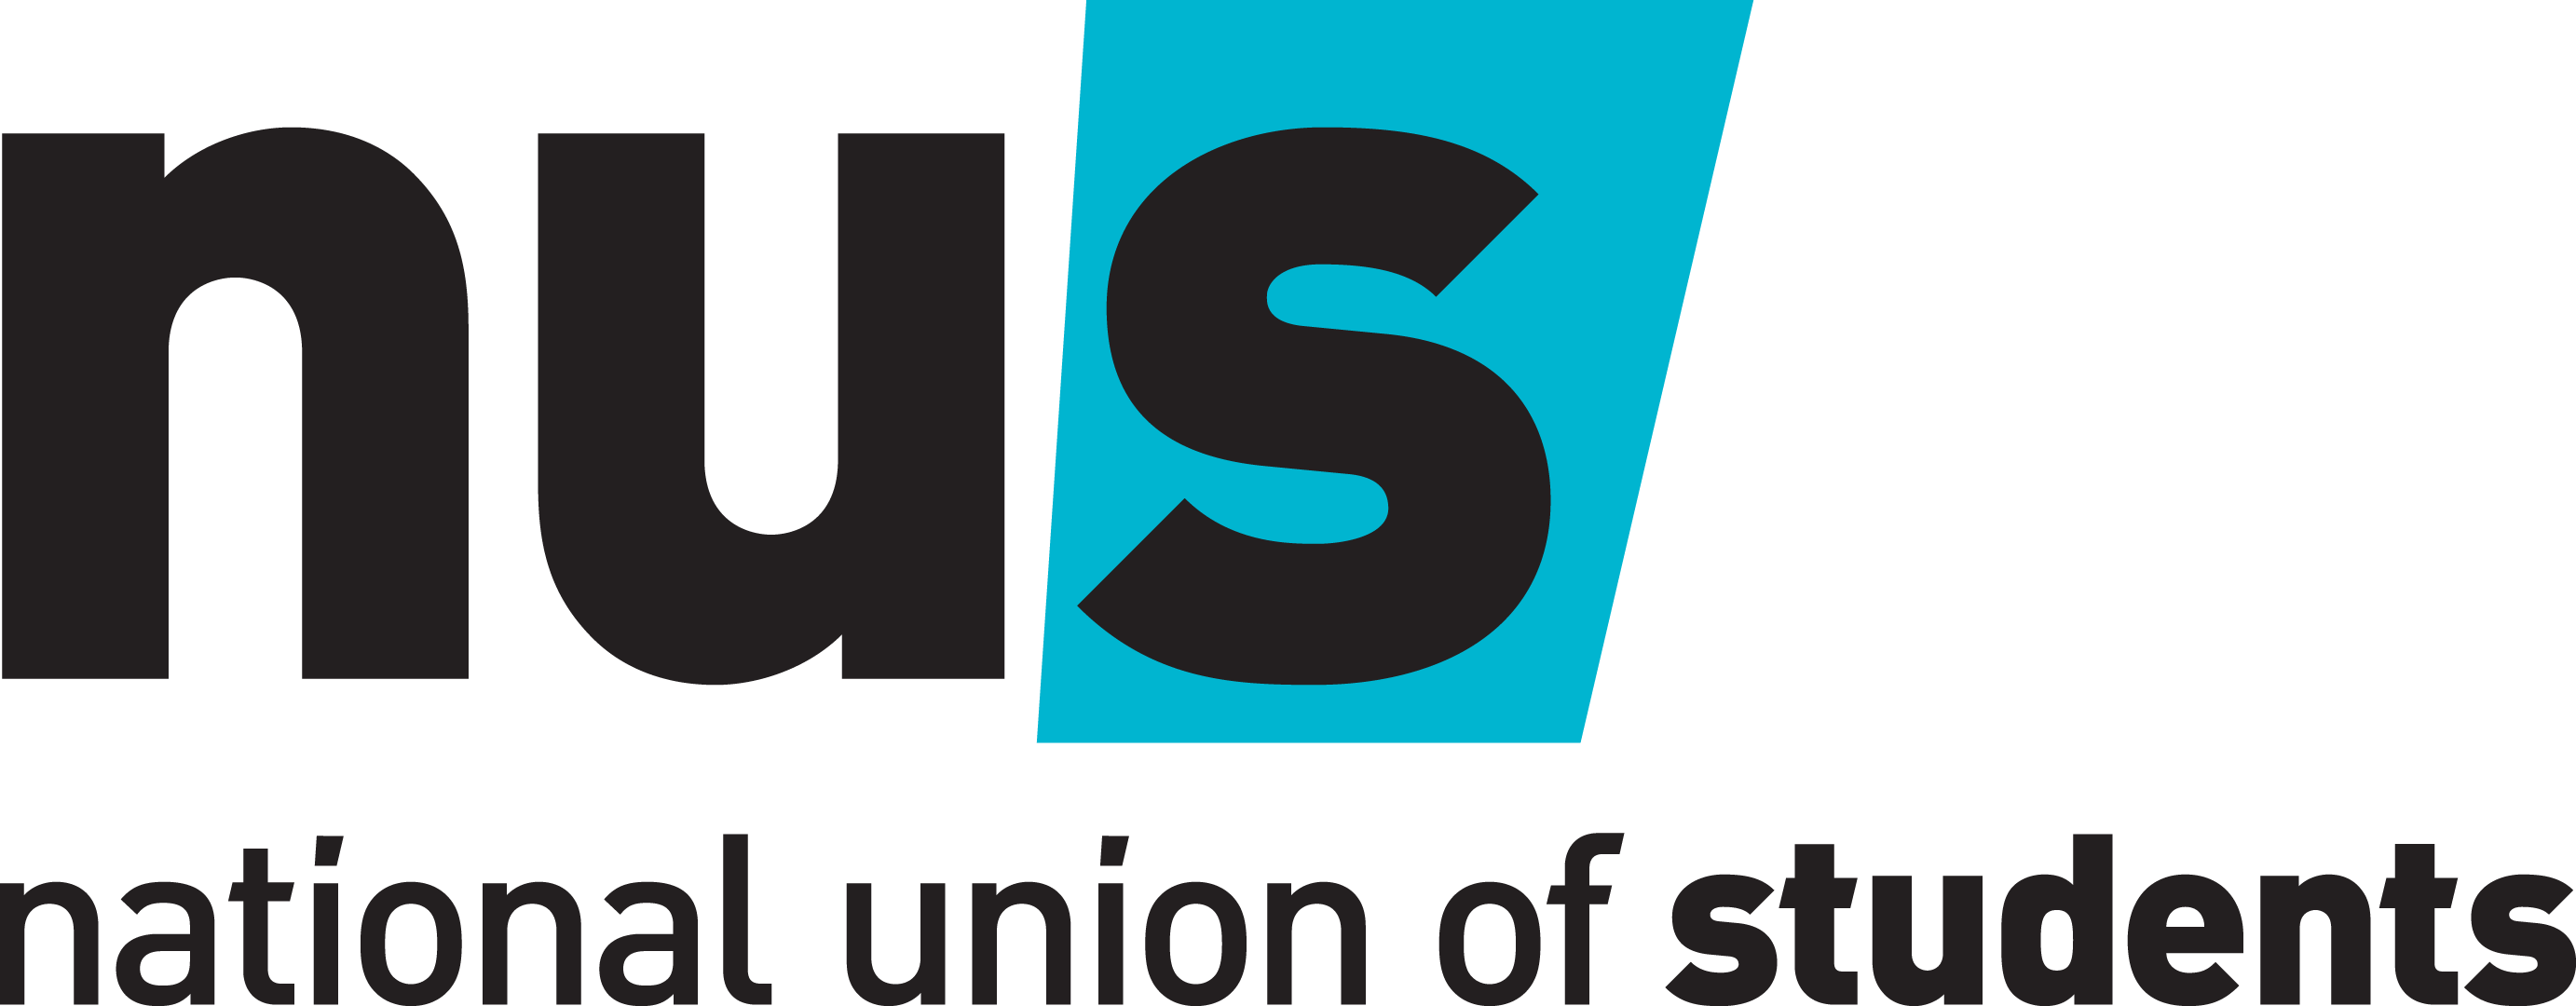 National Union Of Students Logo (2765x1080)